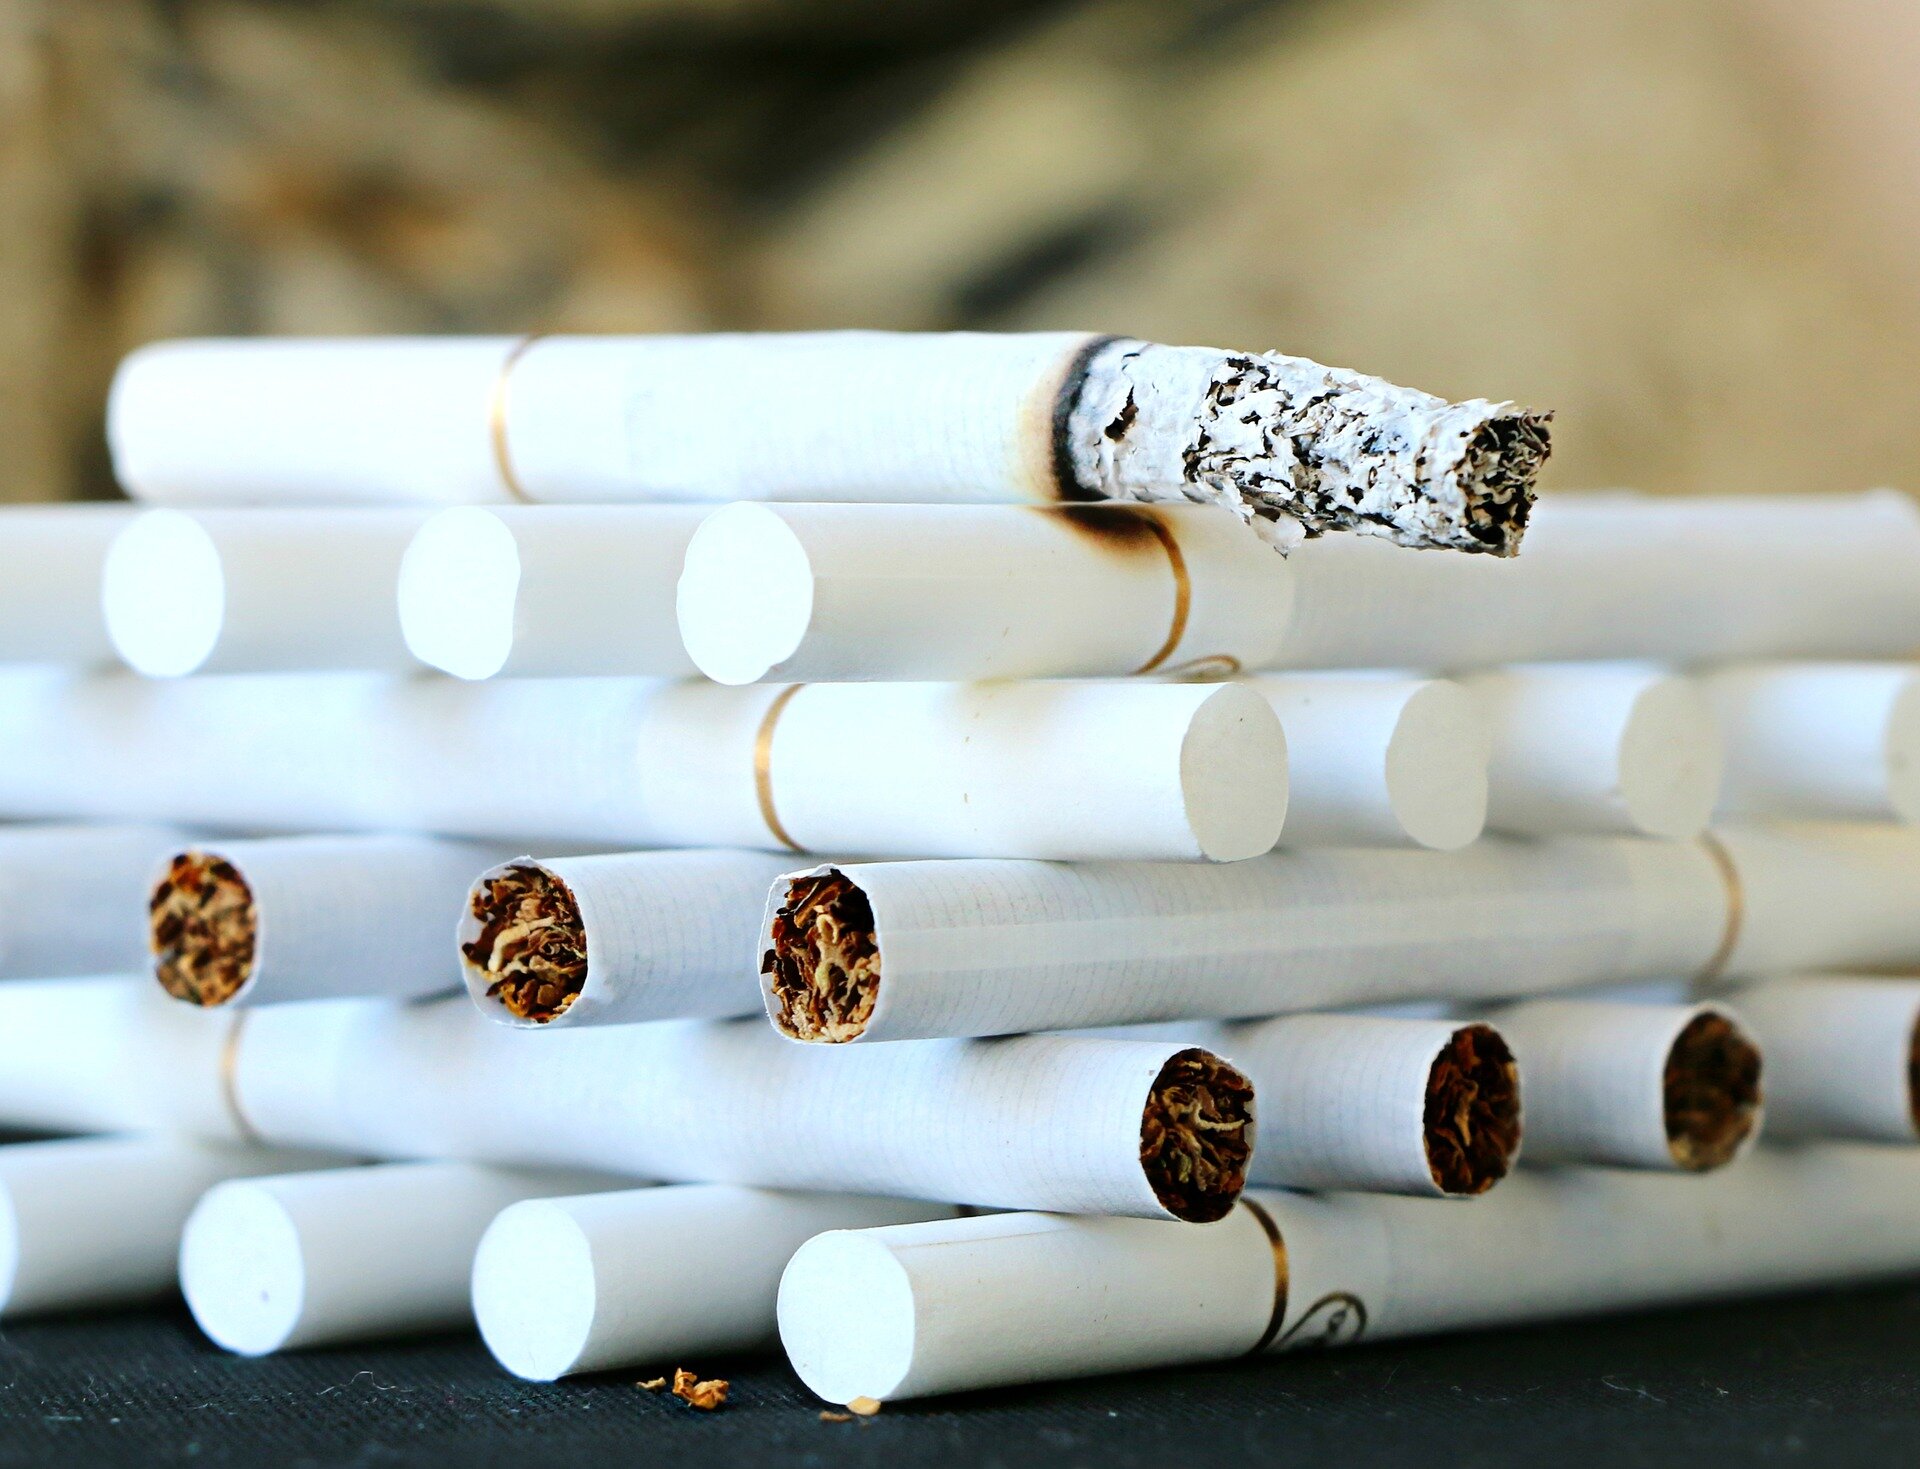 #Denmark mulls cigarette sale ban for next generations